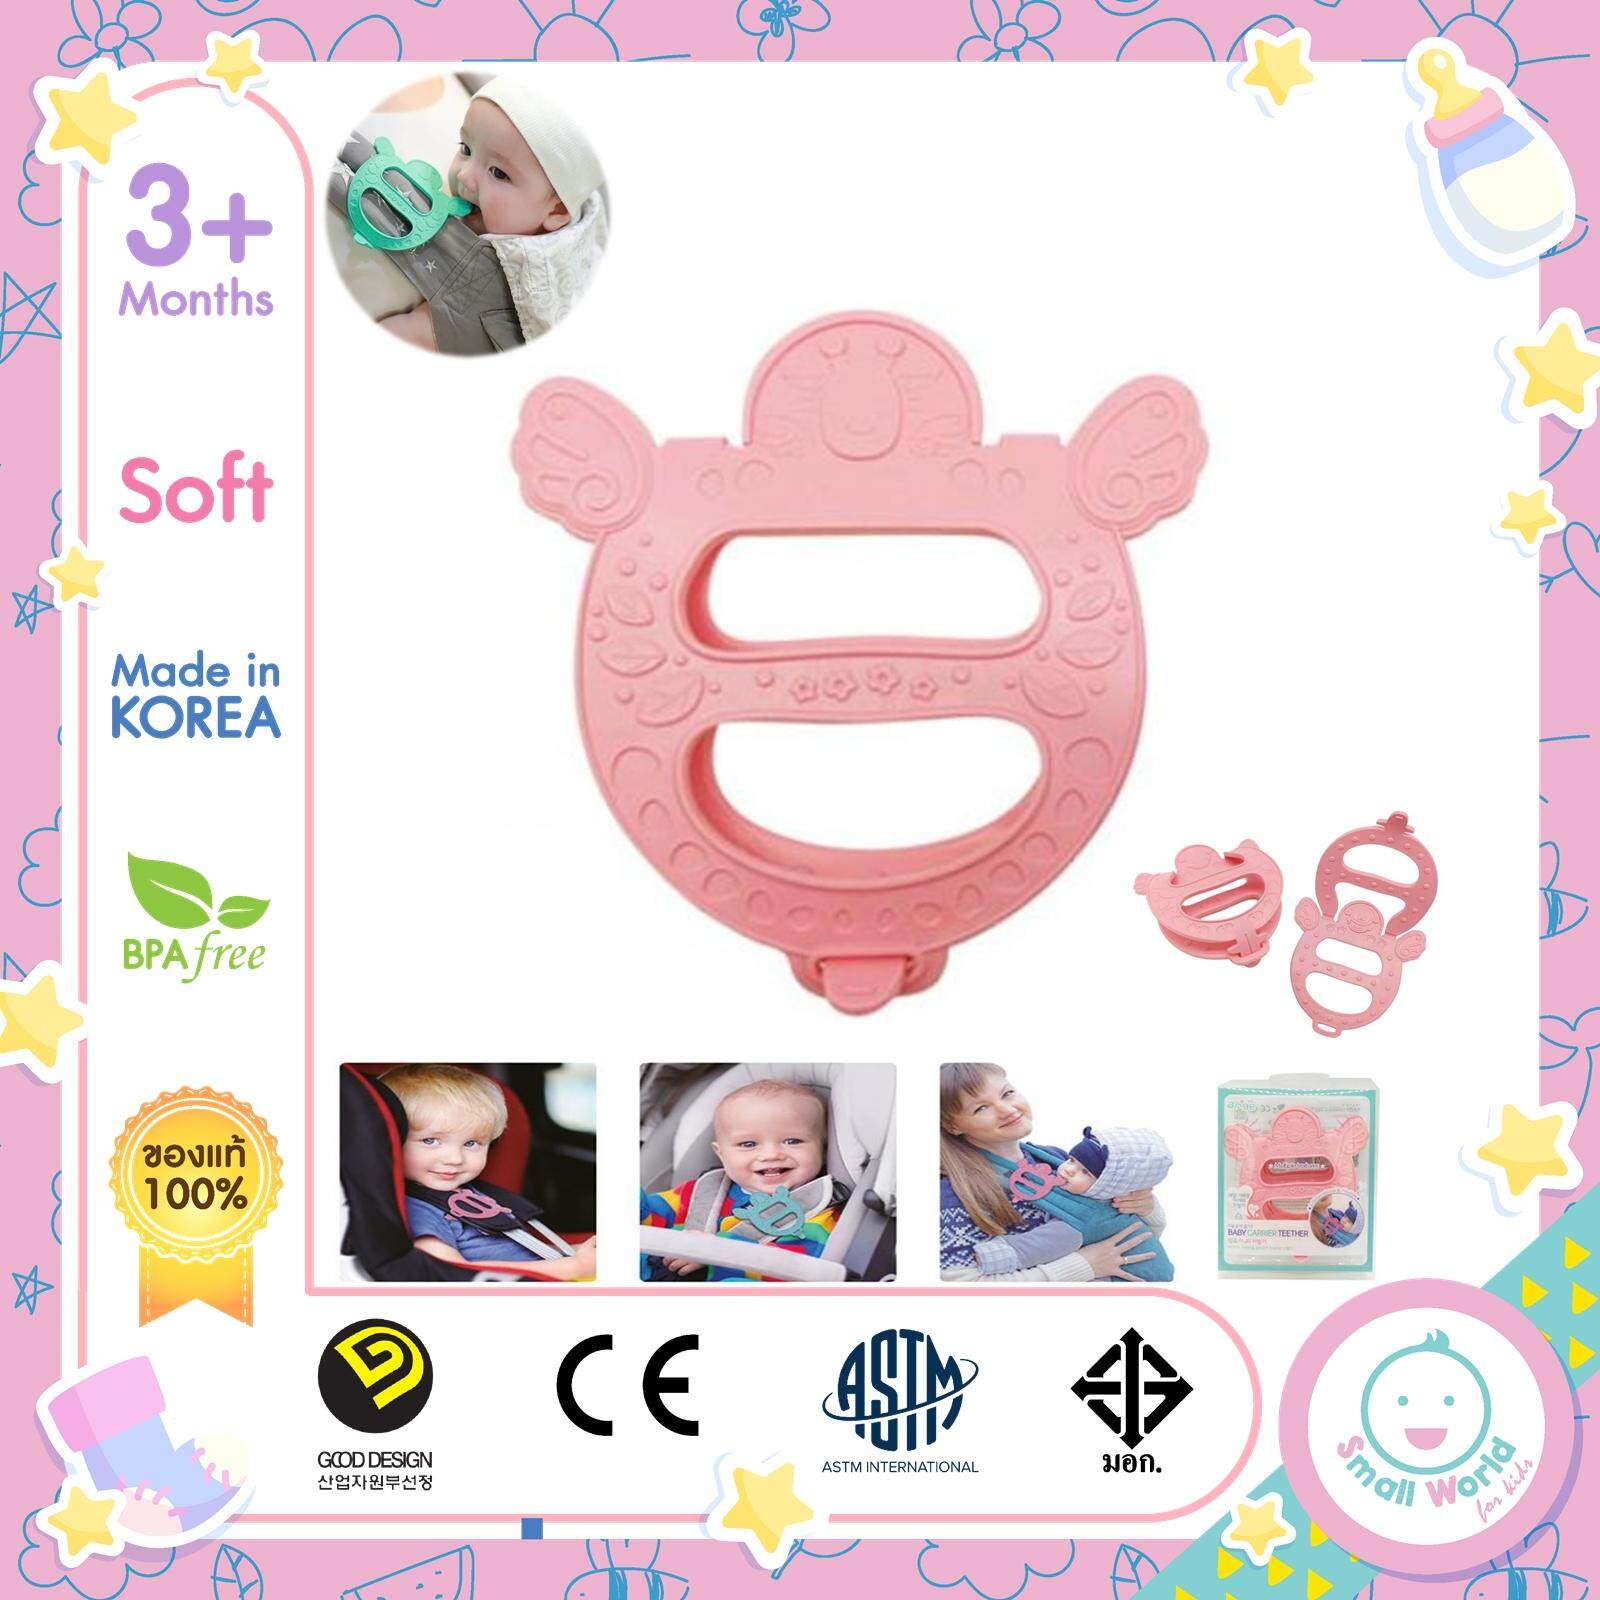 Ange อังจู ของเล่นเสริมพัฒนาการ สำหรับเด็กวัย 3 เดือน ยางกัดเป้อุ้ม ยางกัด อังจู Carrier Teether (สินค้าของแท้ มี มอก.)